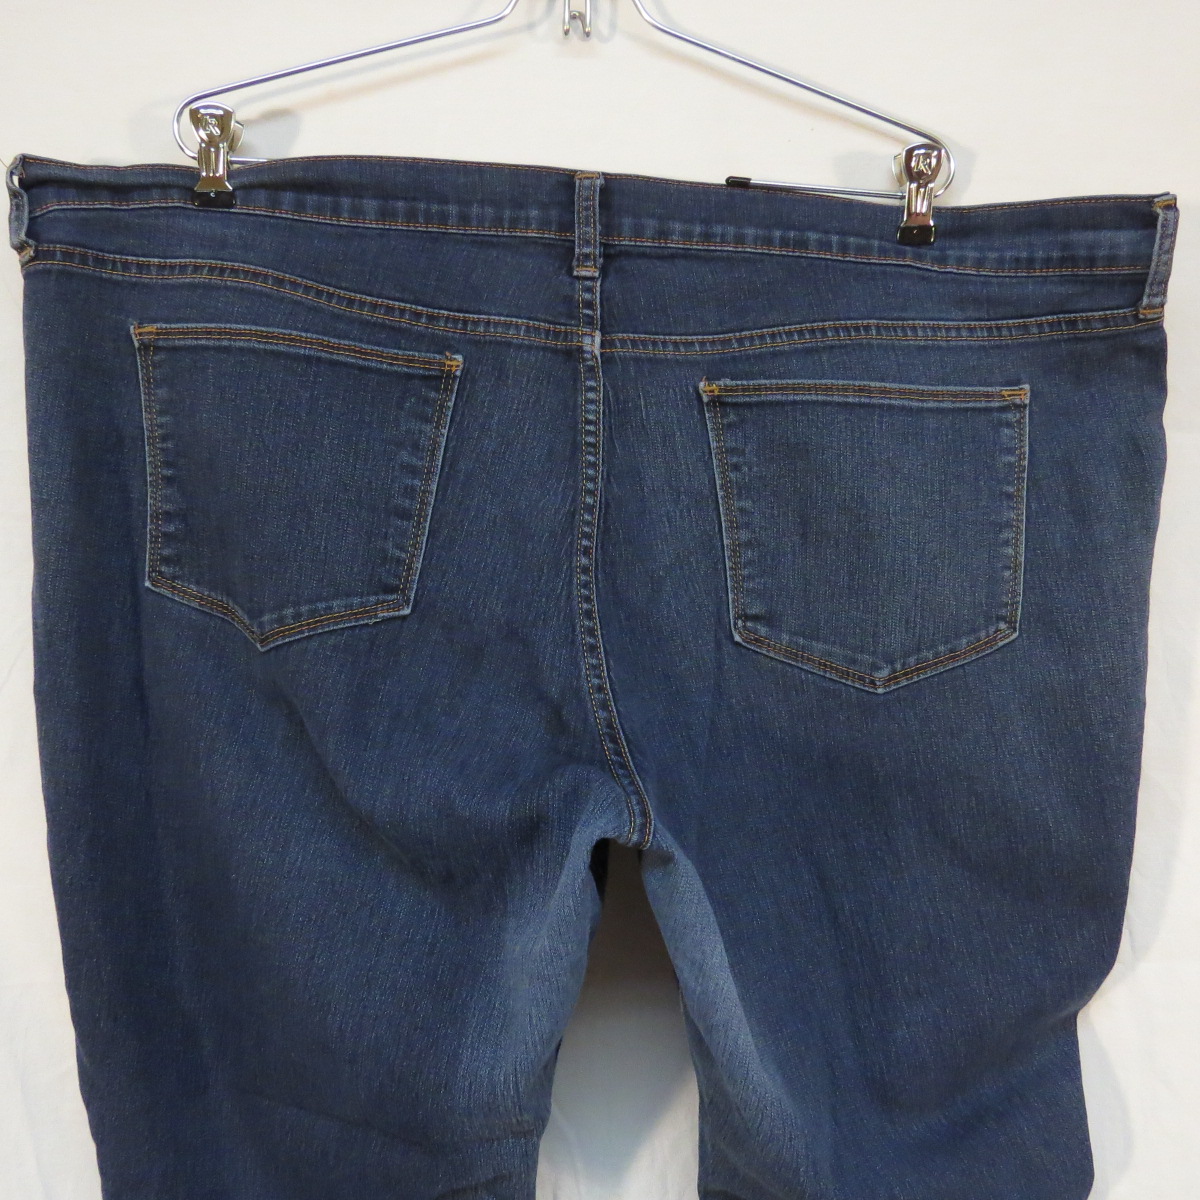 Old Navy The Flirt Jeans Size 20 Regular | eBay